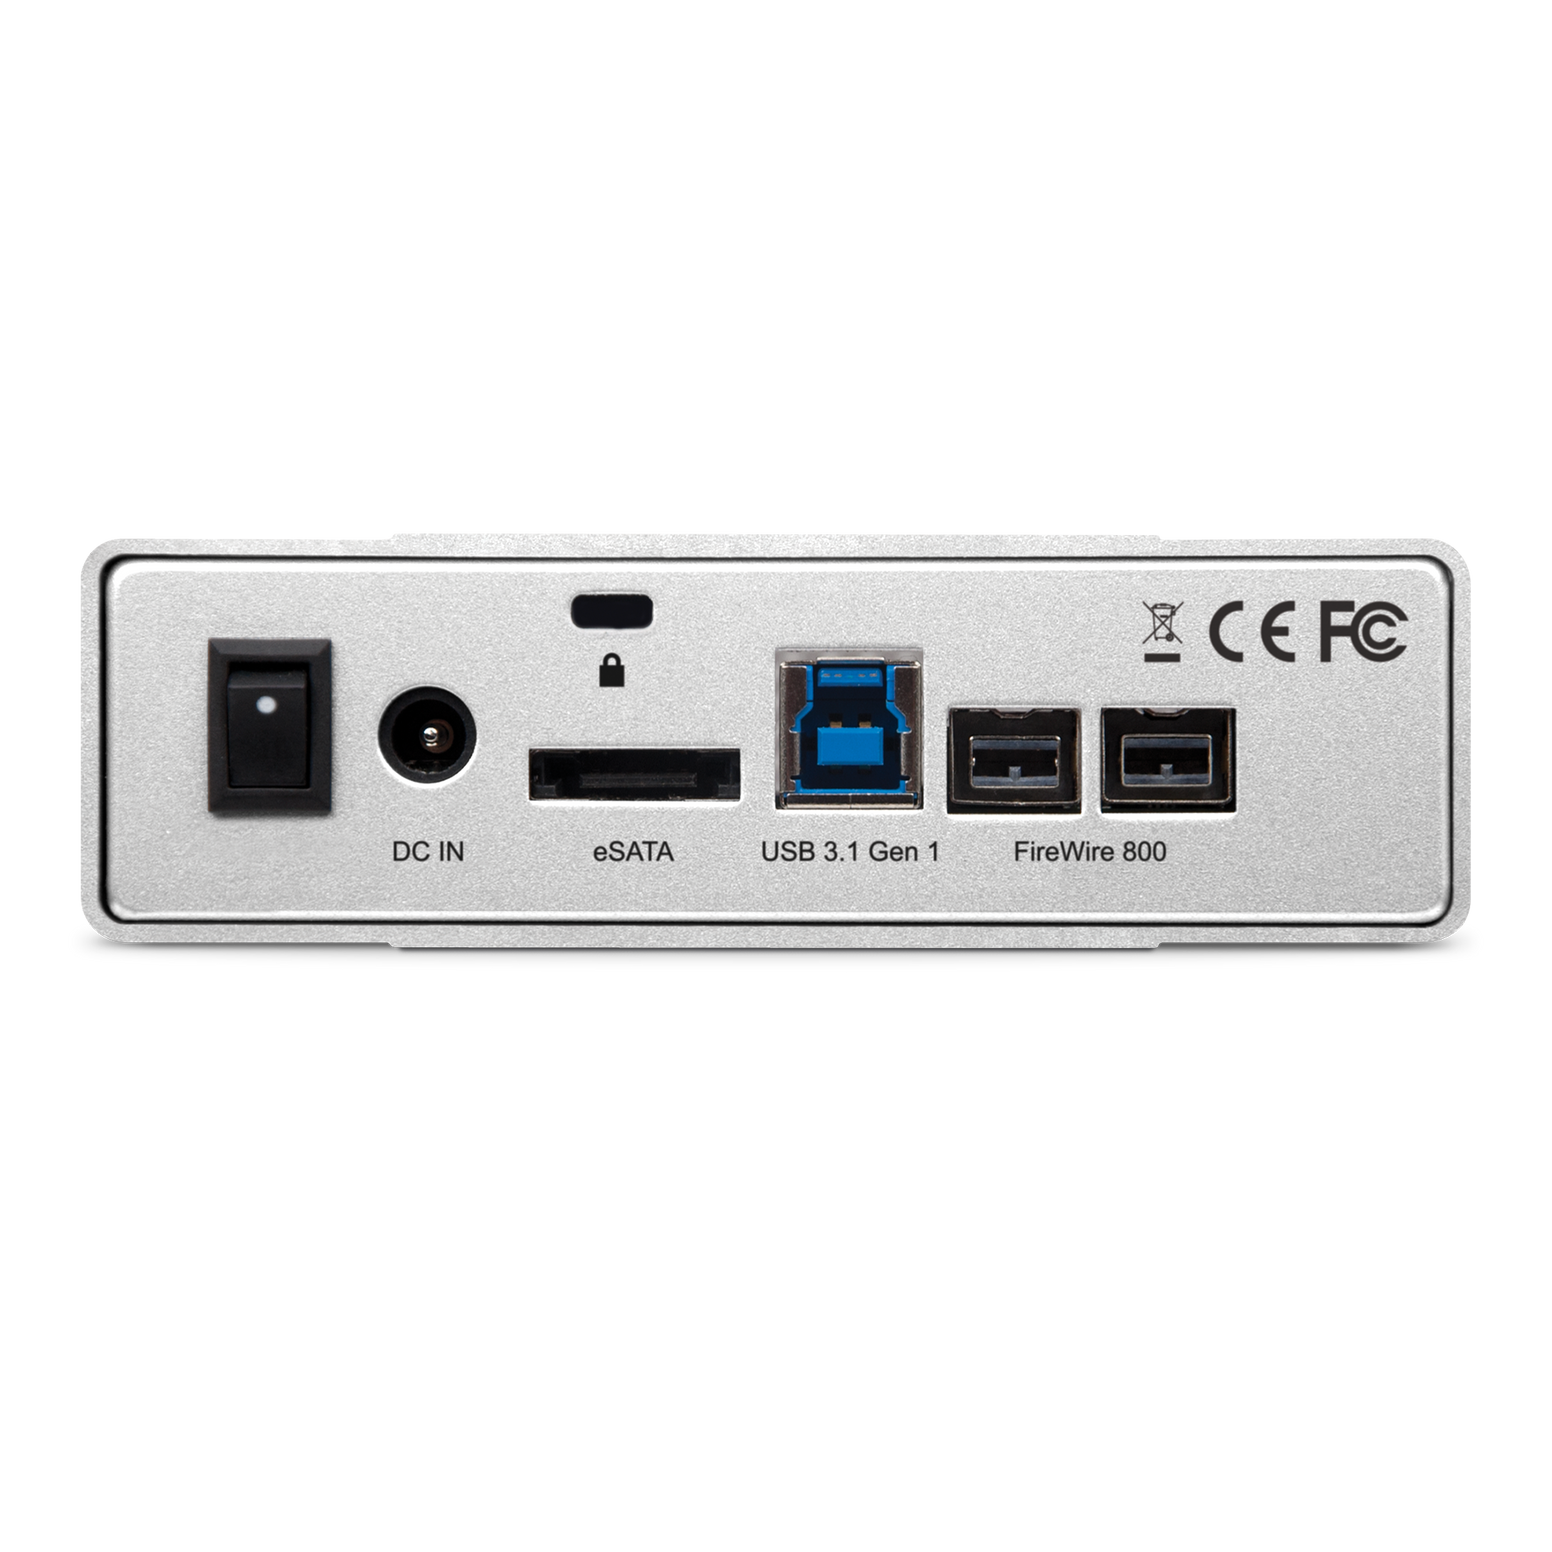 OWC 4TB Mercury Elite Pro (USB 3.1 Gen 1 / FireWire 800  / eSATA) - Discontinued